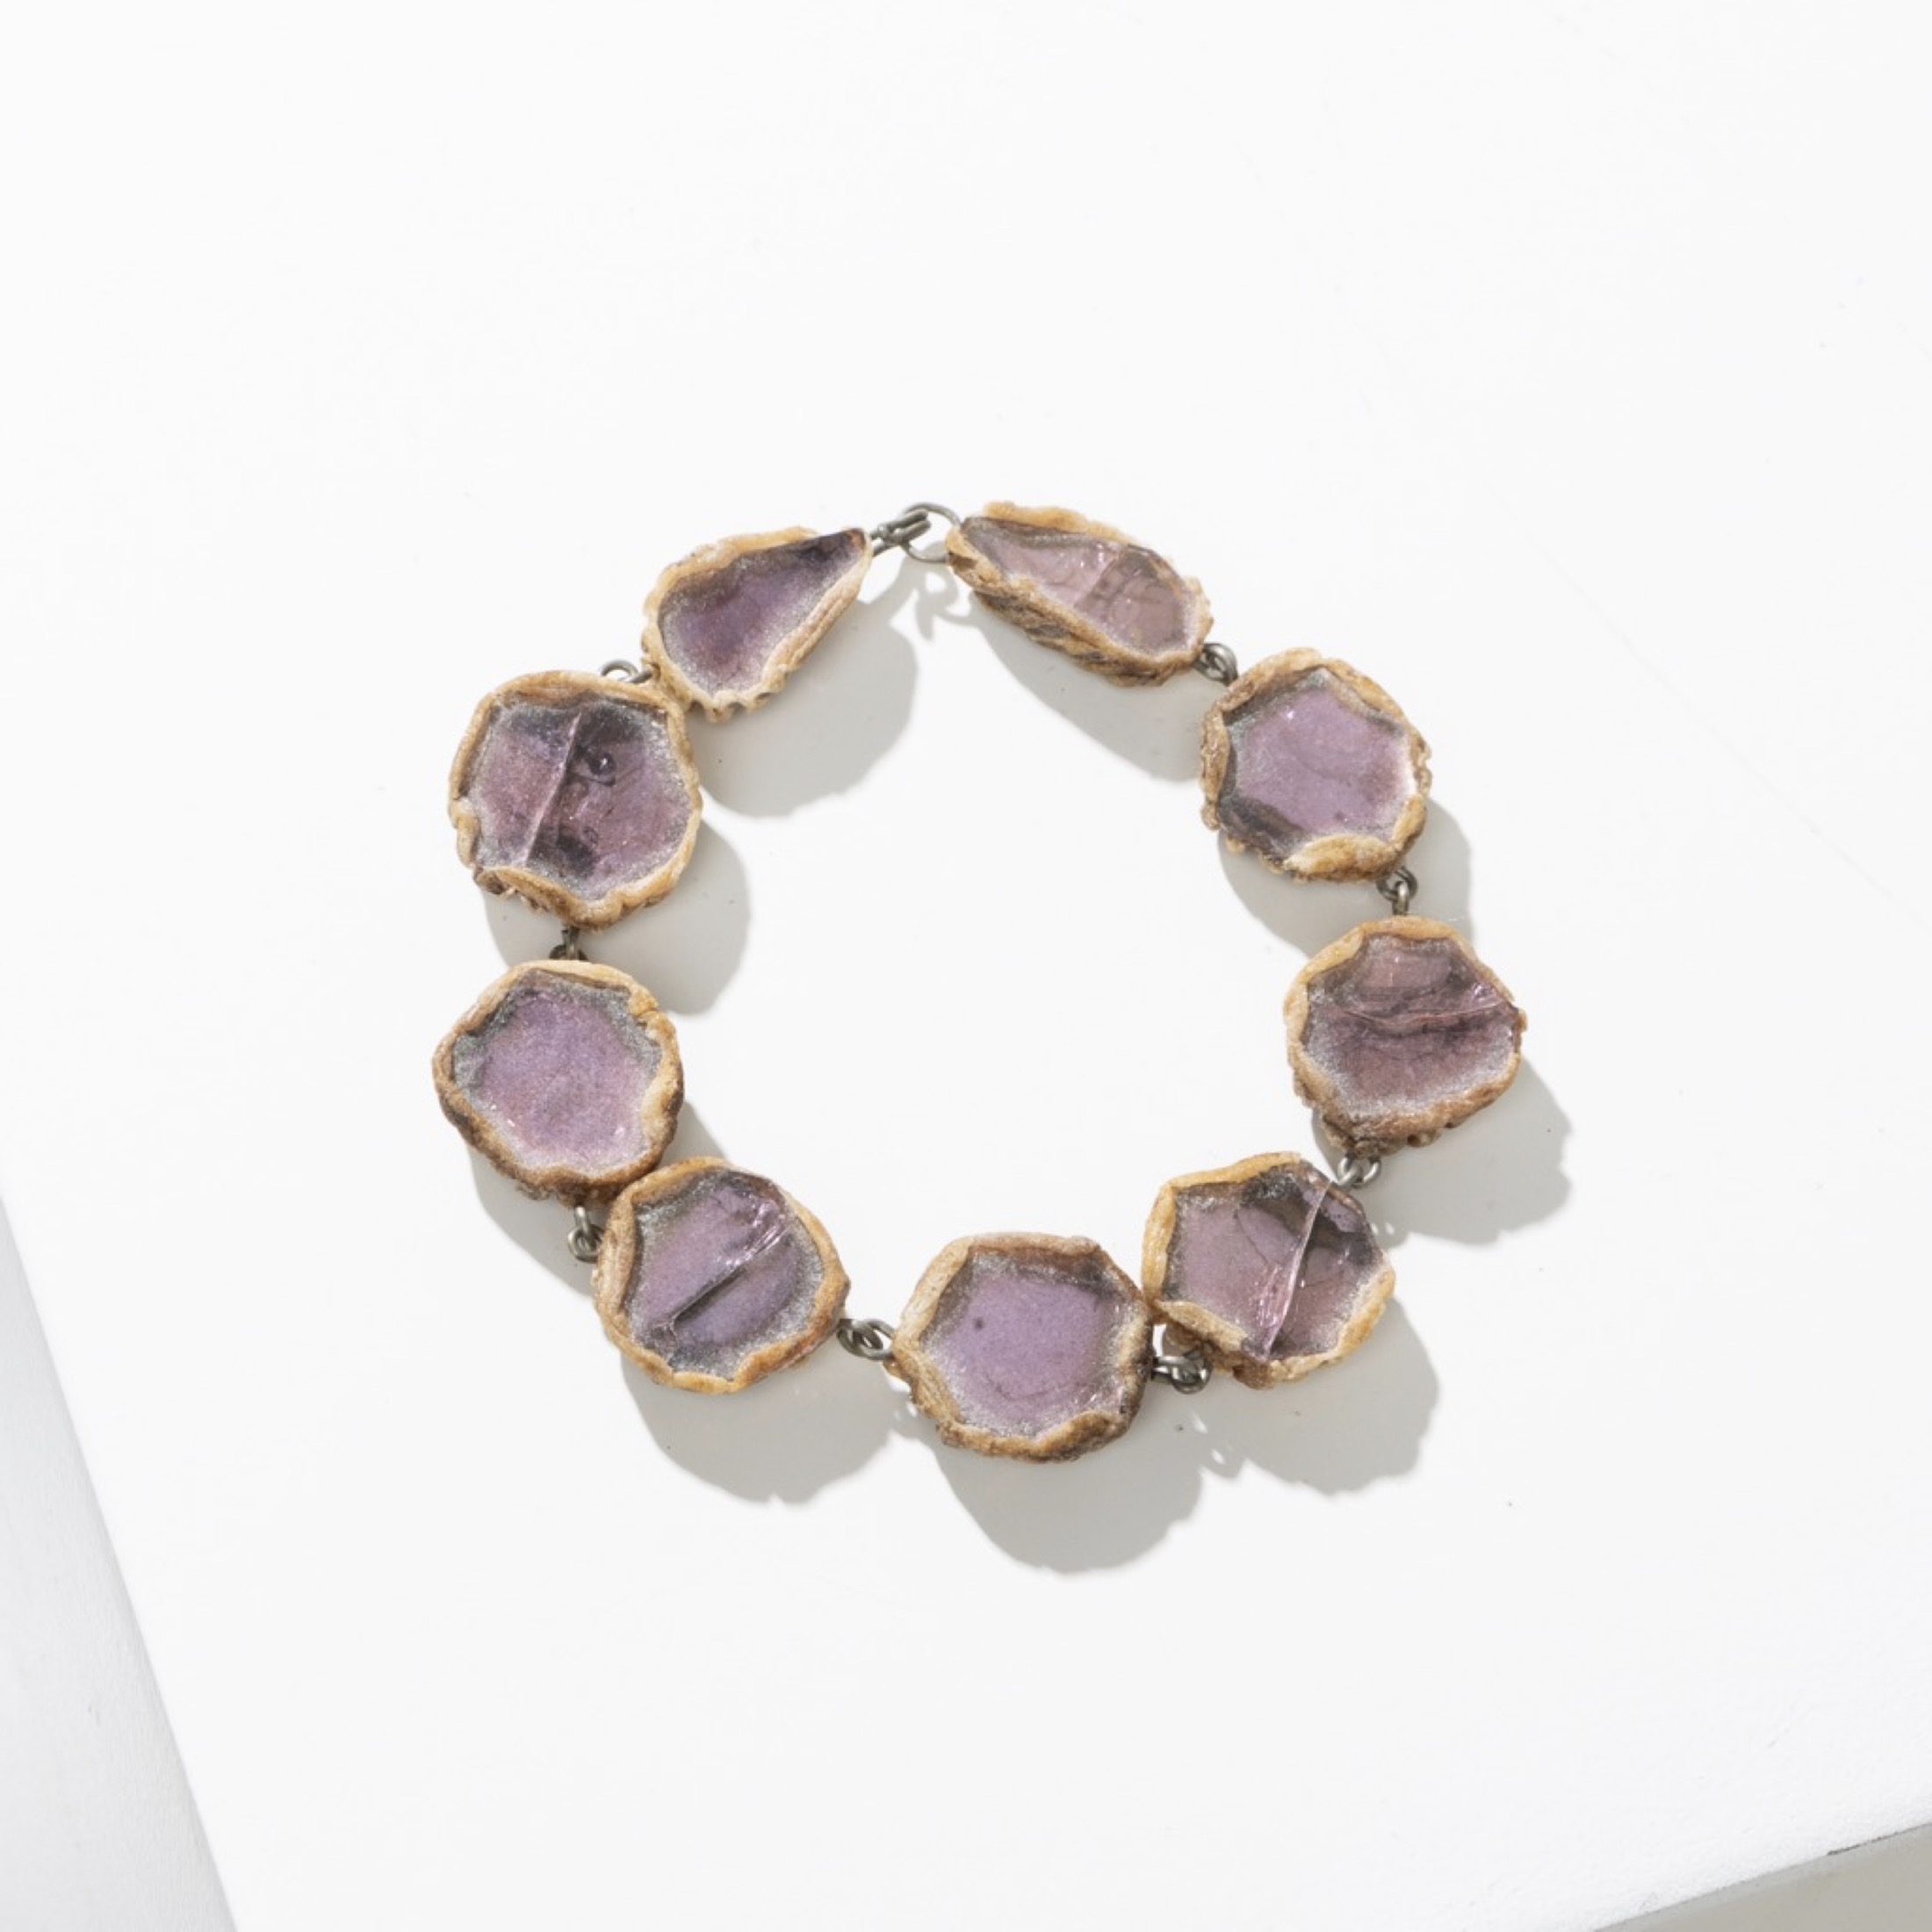 Bracelet Line Vautrin - Talosel with violetts mirrors - IMG_001